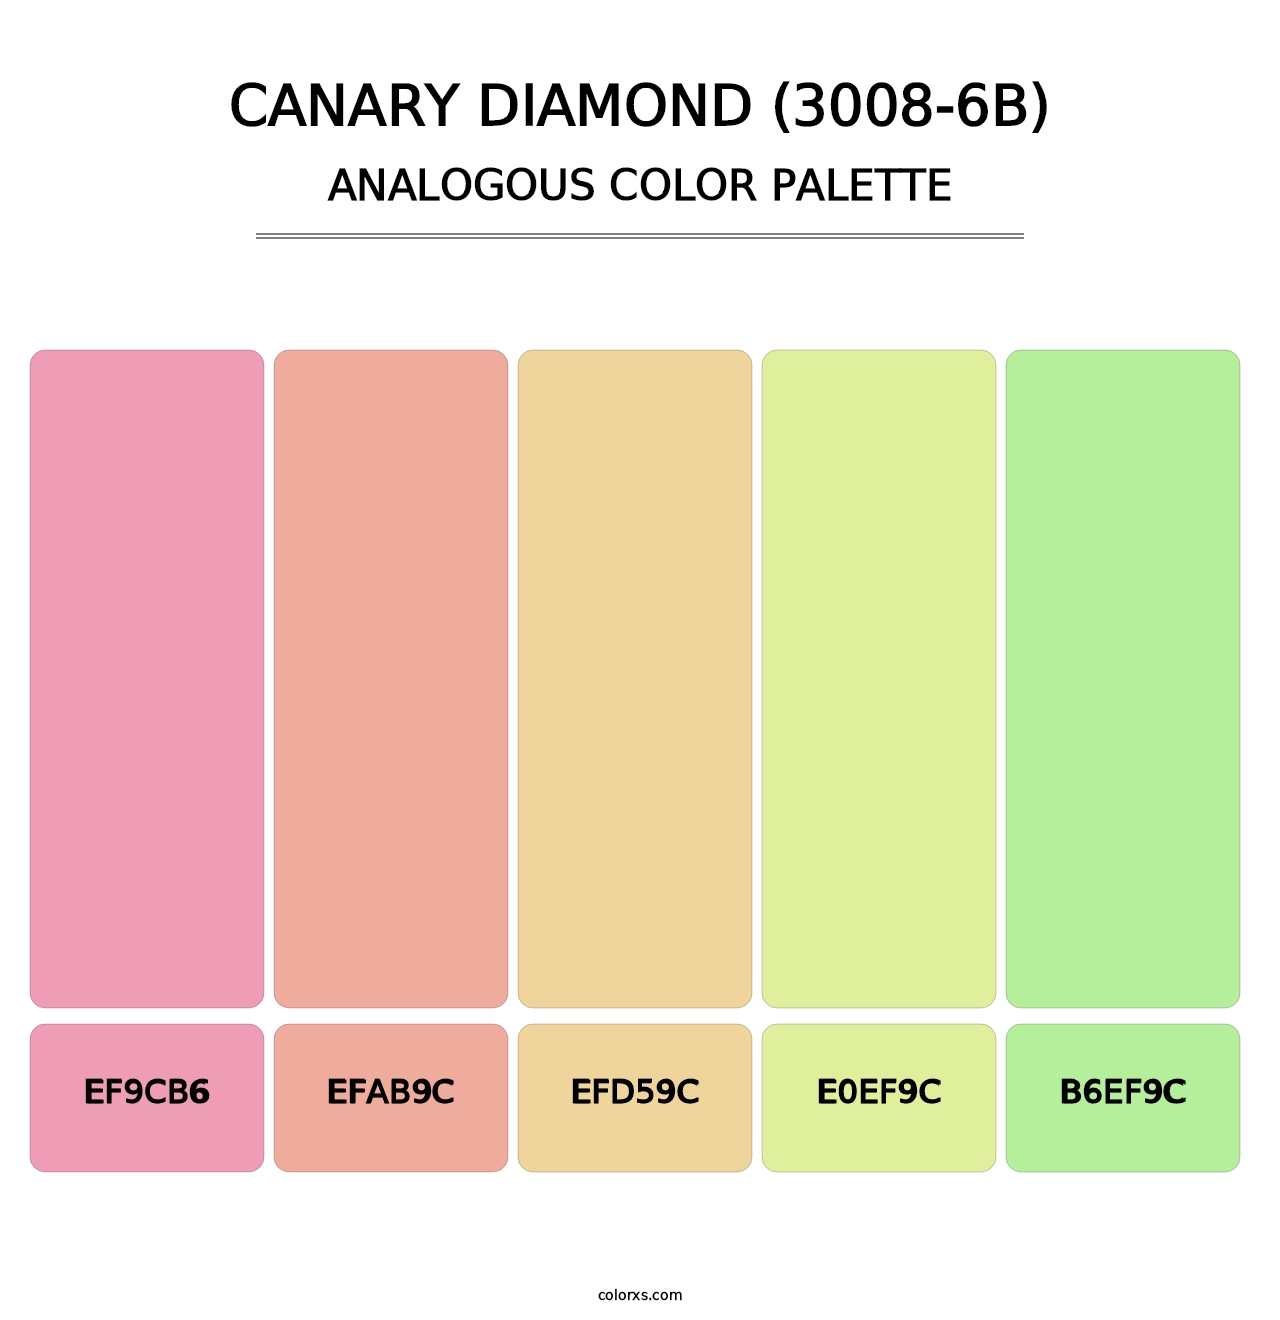 Canary Diamond (3008-6B) - Analogous Color Palette